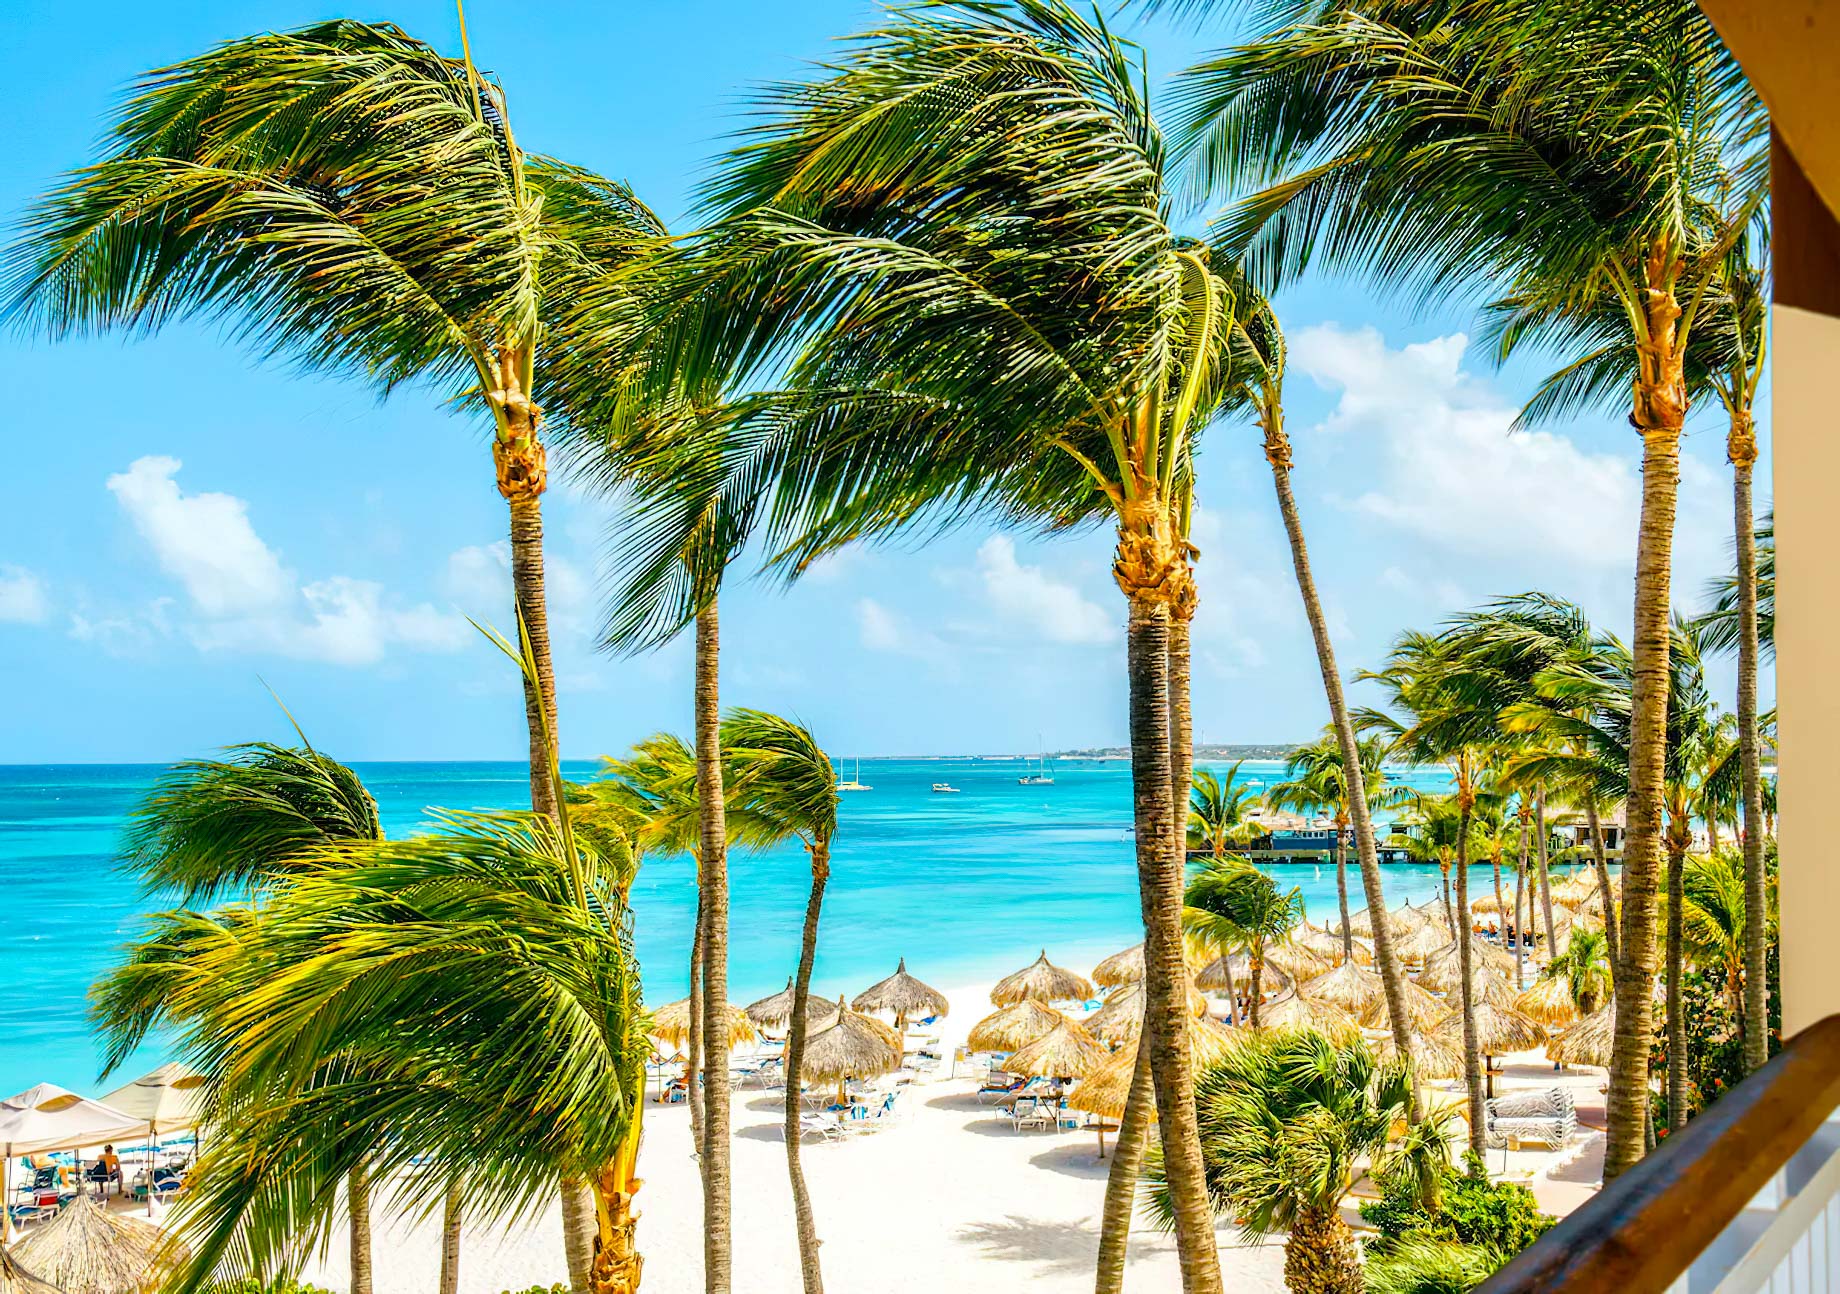 Hyatt Regency Aruba Resort & Casino – Noord, Aruba – Beach View